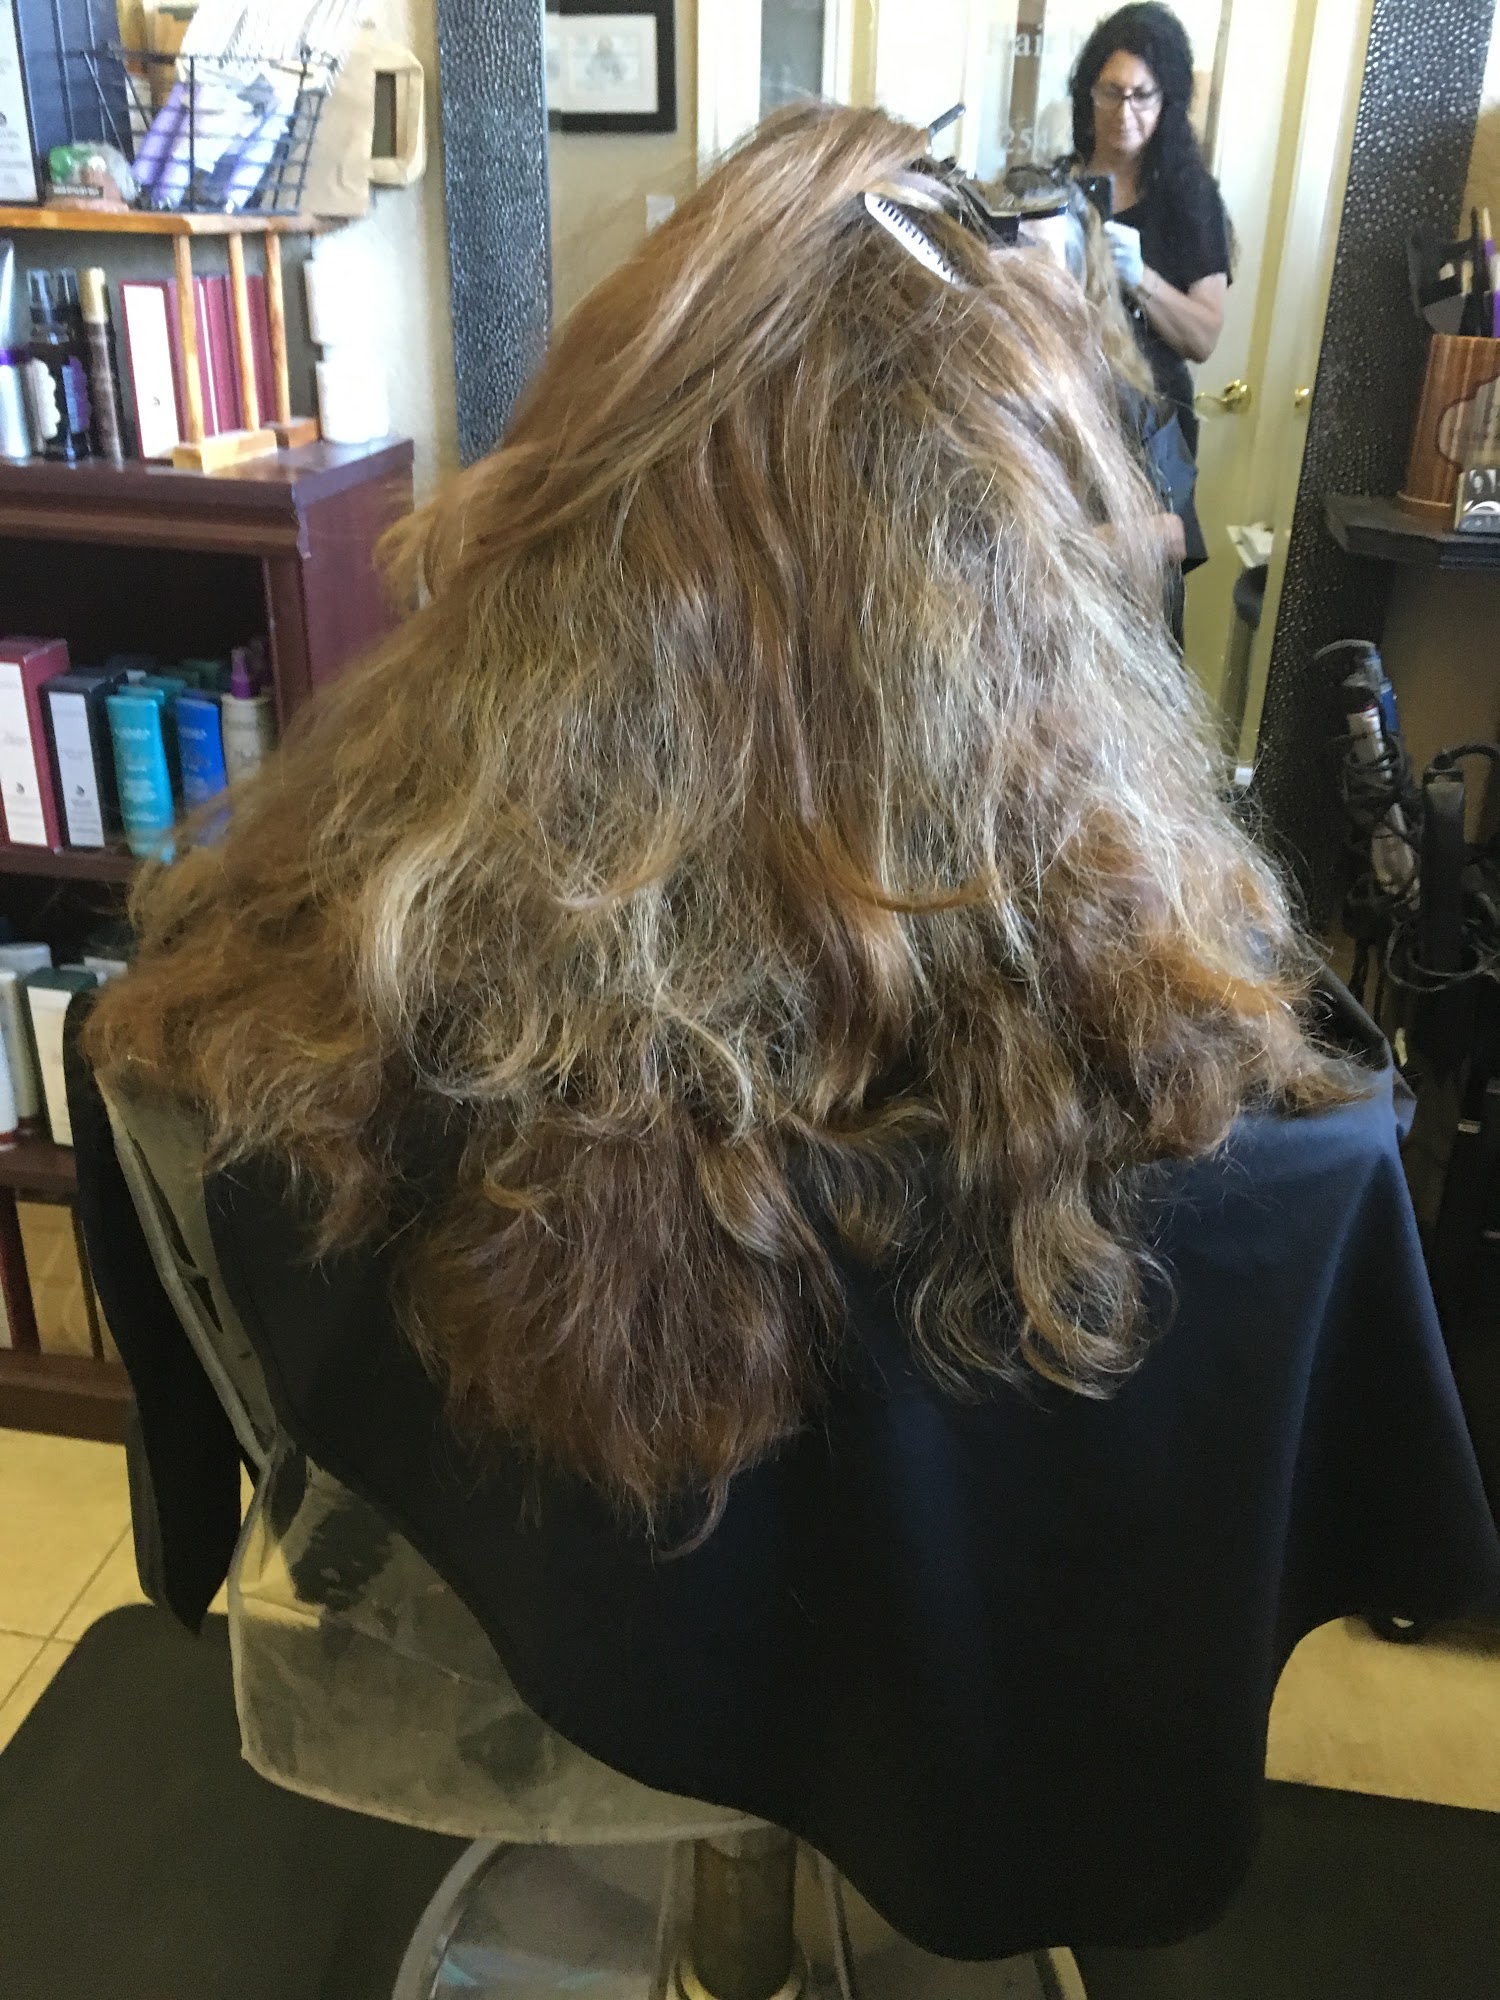 Hair by Deborah Pesses 7405 FM2147, Horseshoe Bay Texas 78657